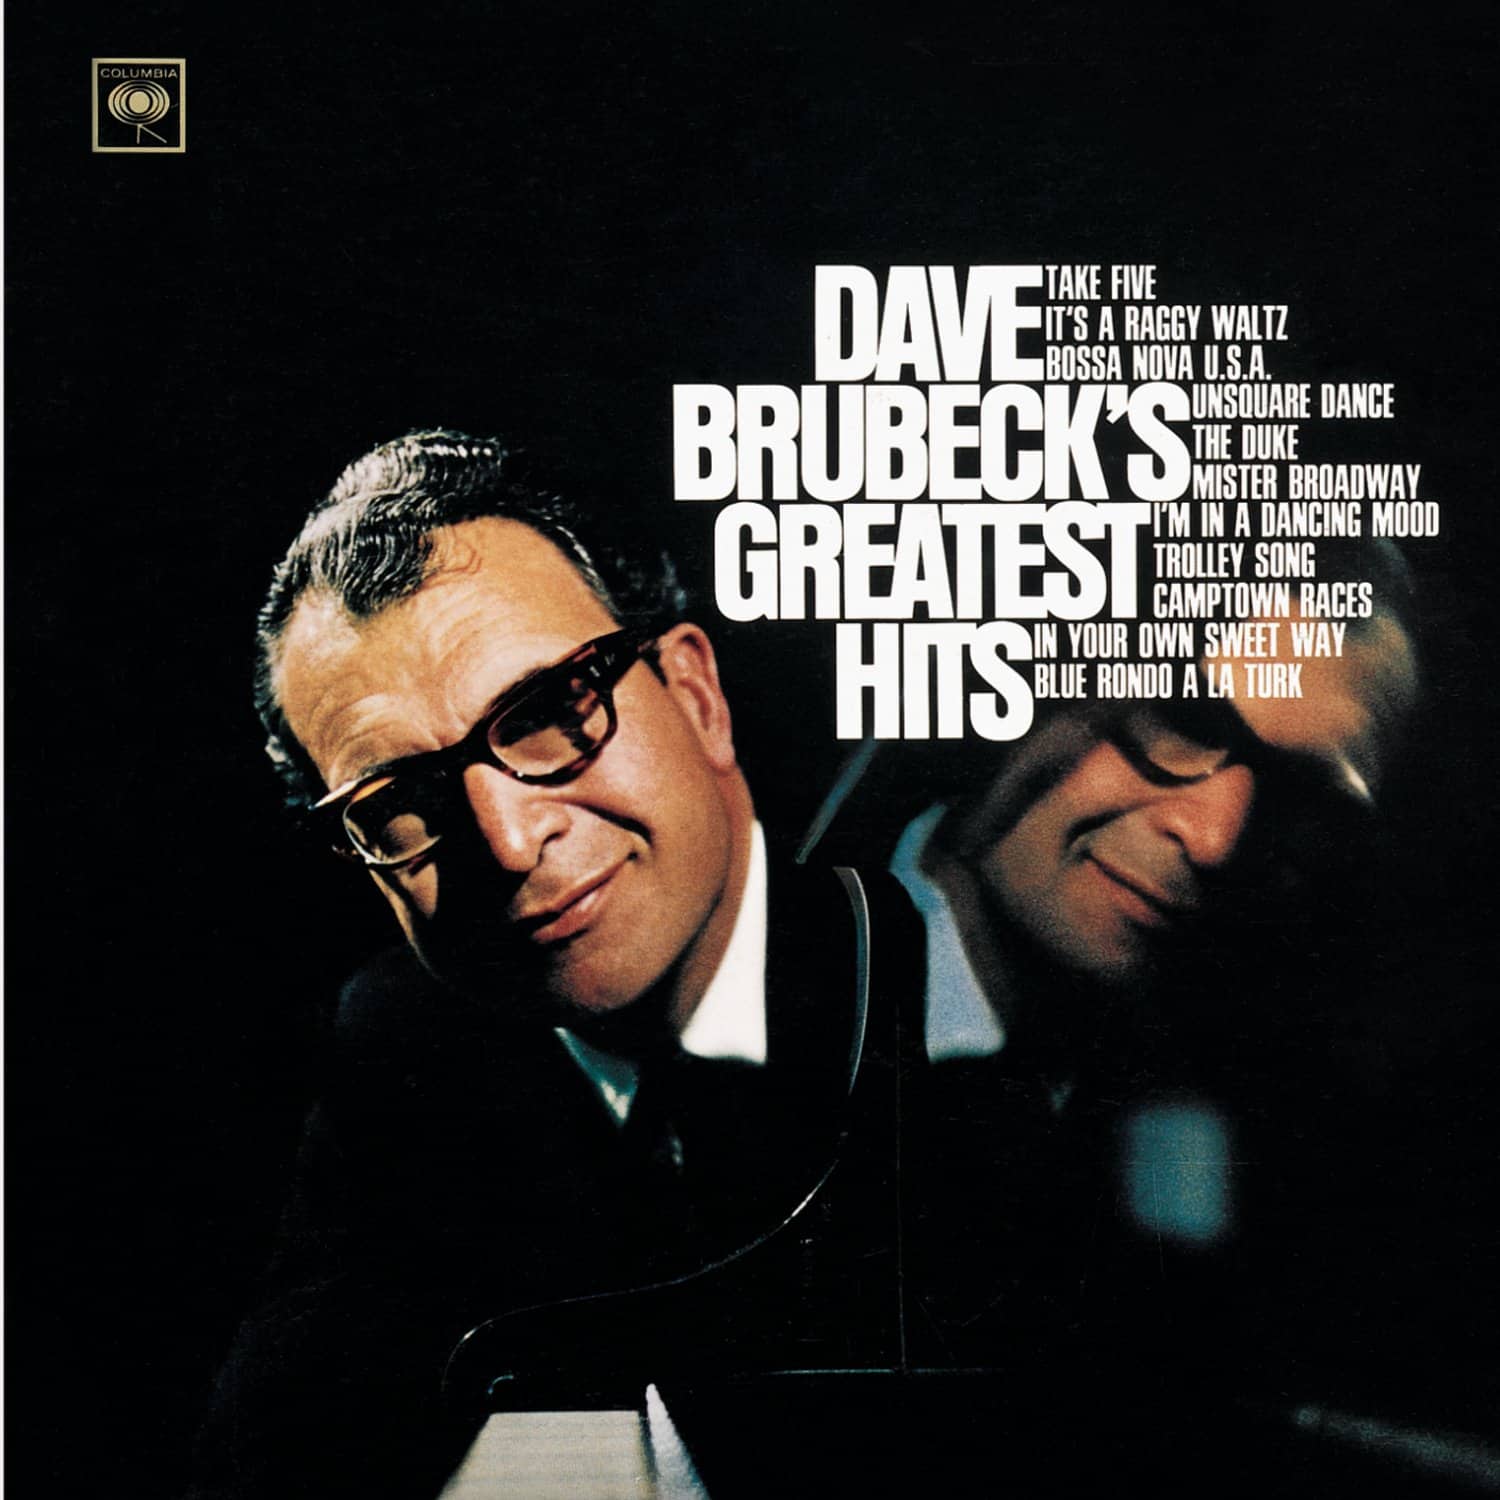 Dave-Brubeck-Greatest Hits-LP-vinyl-record-album-front